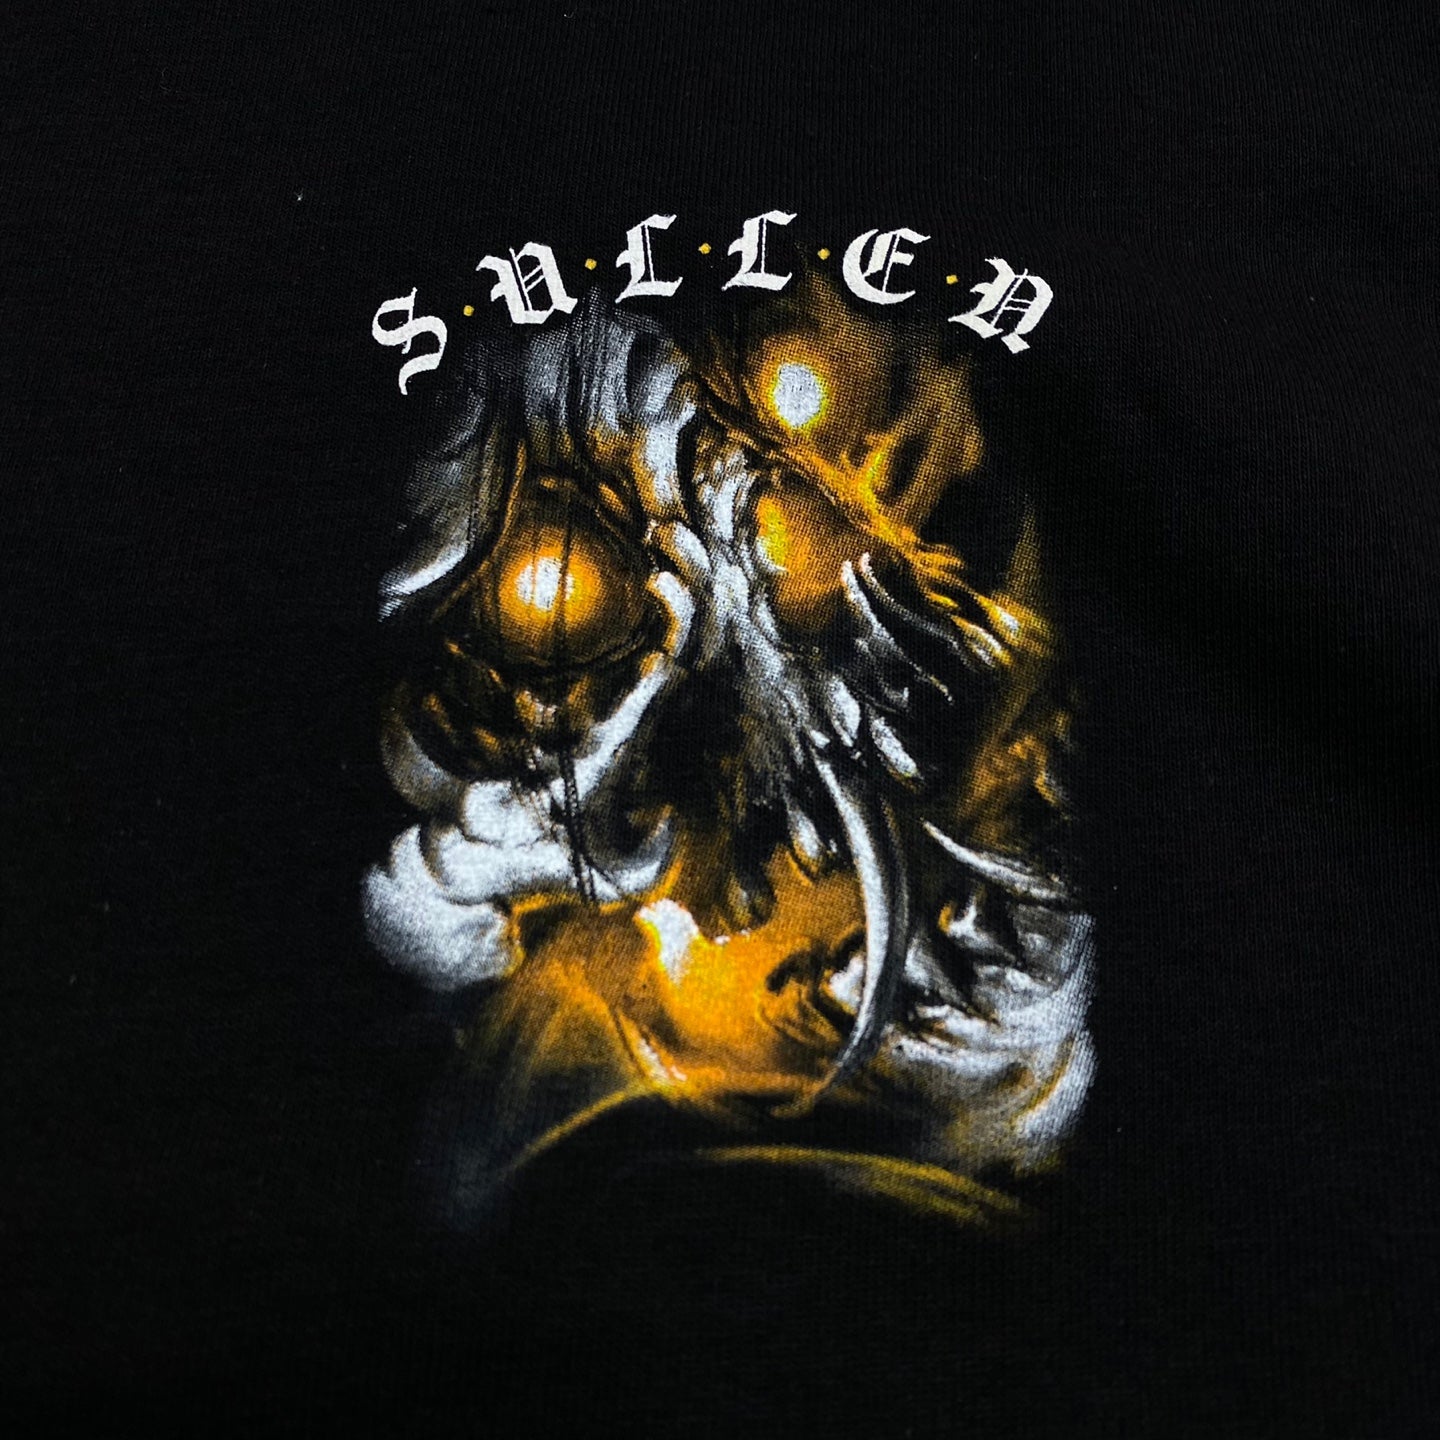 Sullen Art Collective Fire Skull Metallic Glowing Fantasy Tattoo T-Shirt